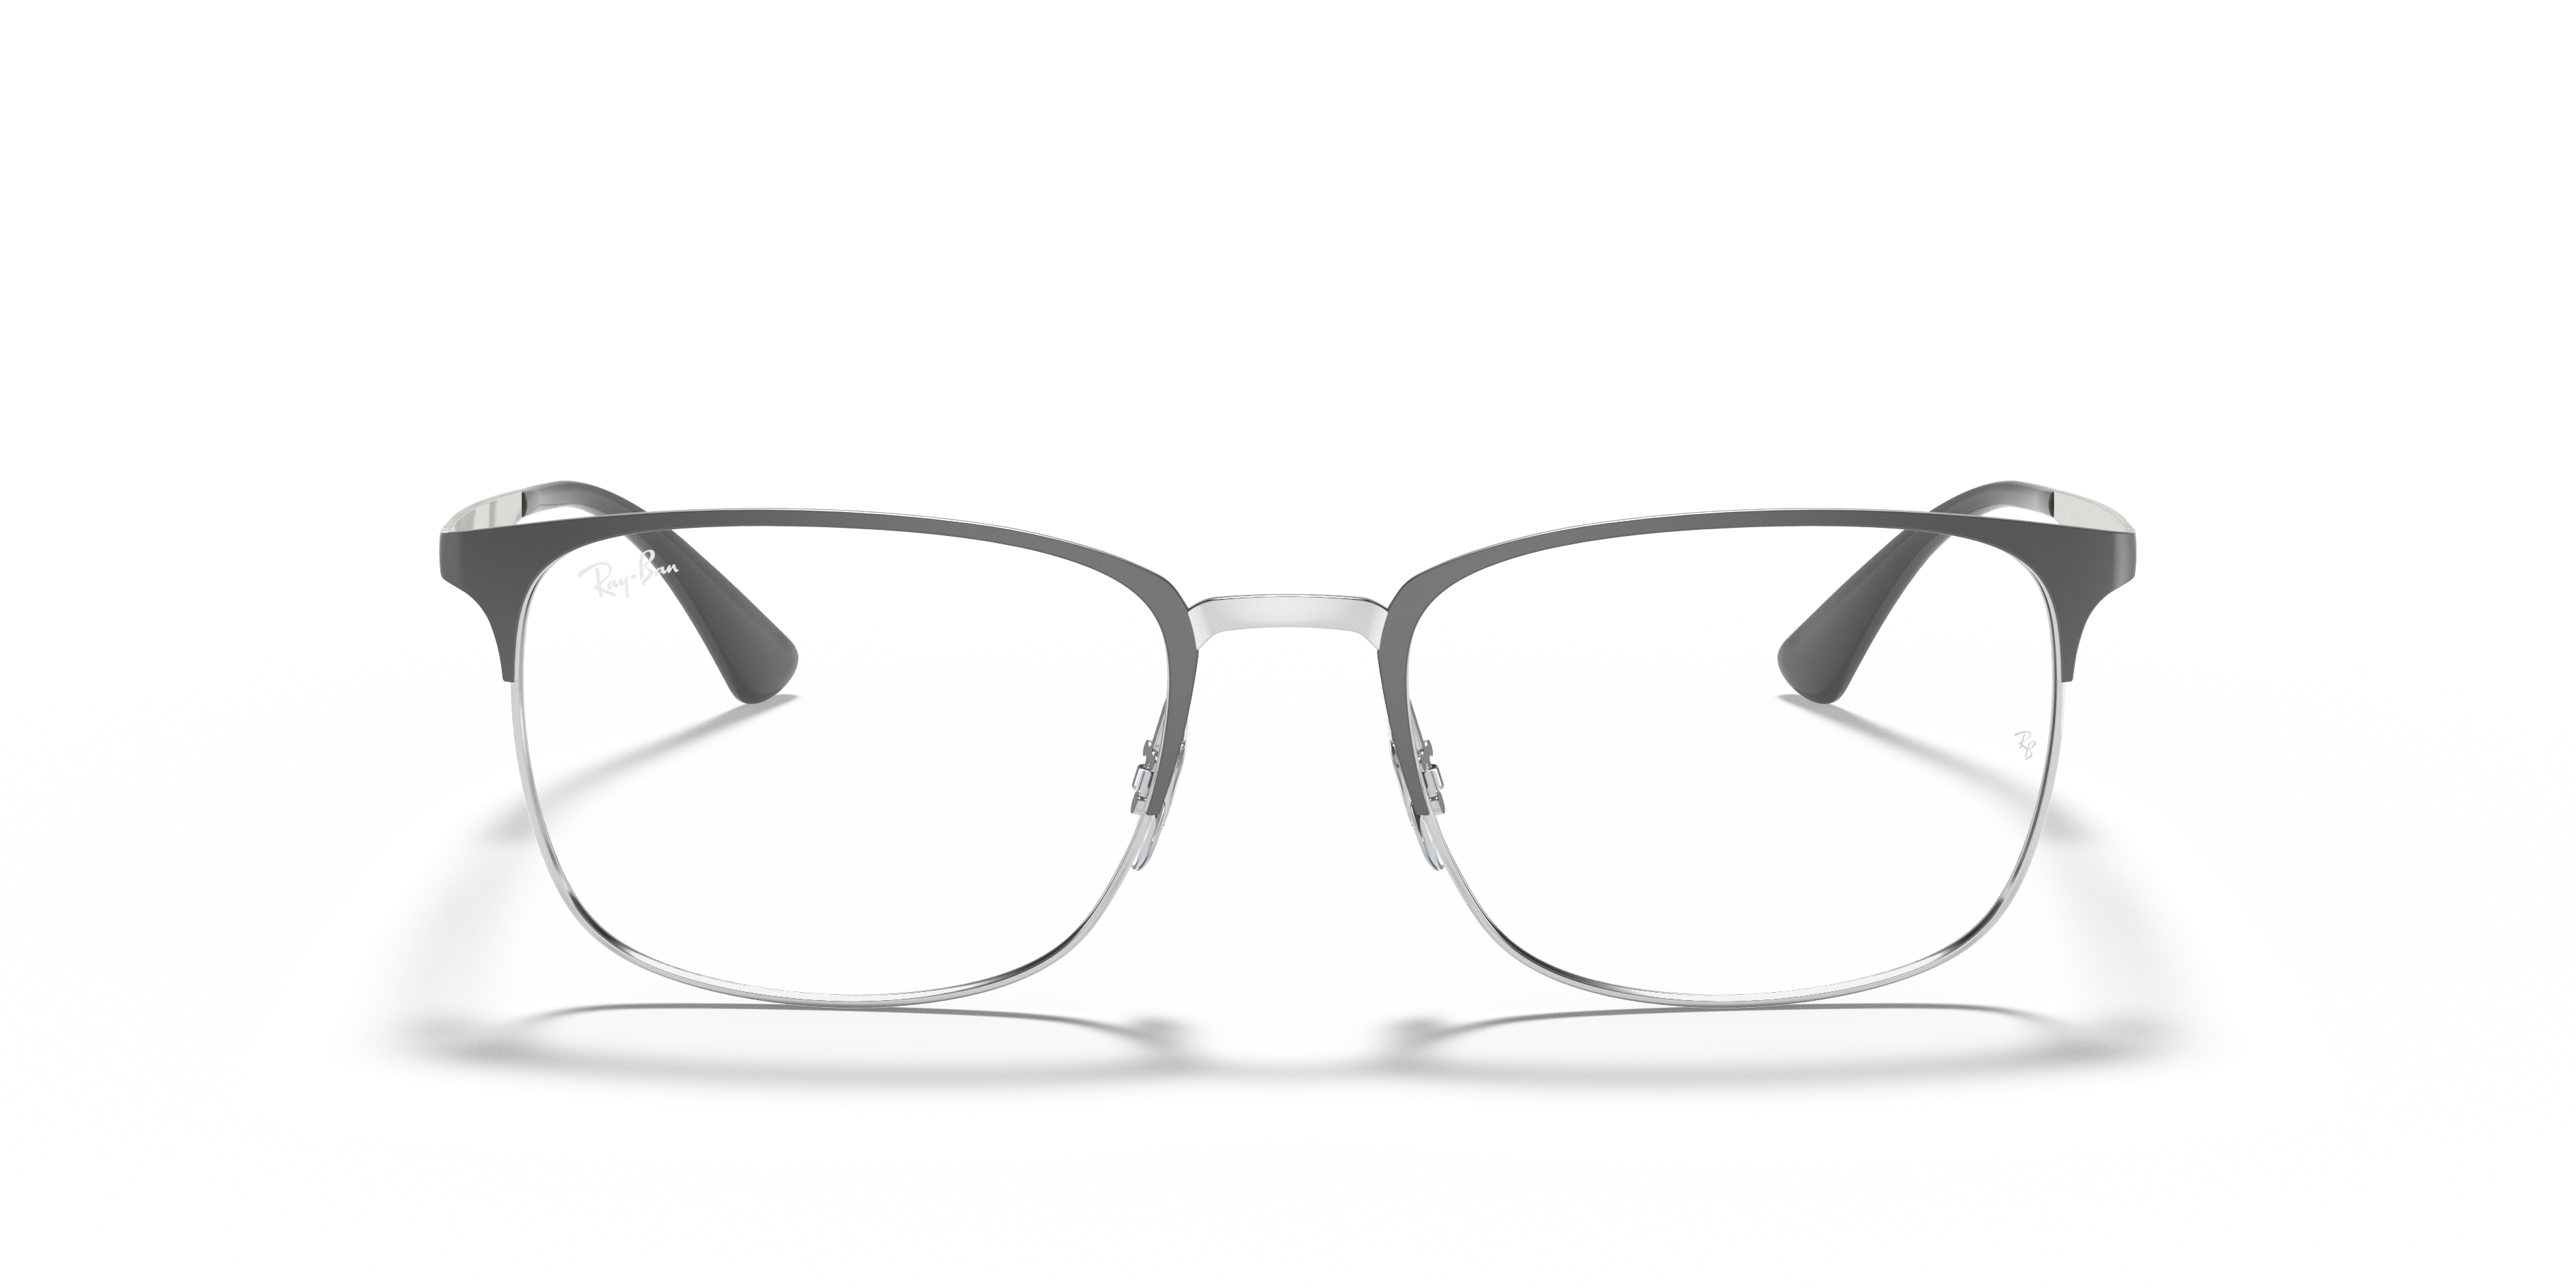 Rb6421 Optics Eyeglasses with Grey On Silver Frame | Ray-Ban®